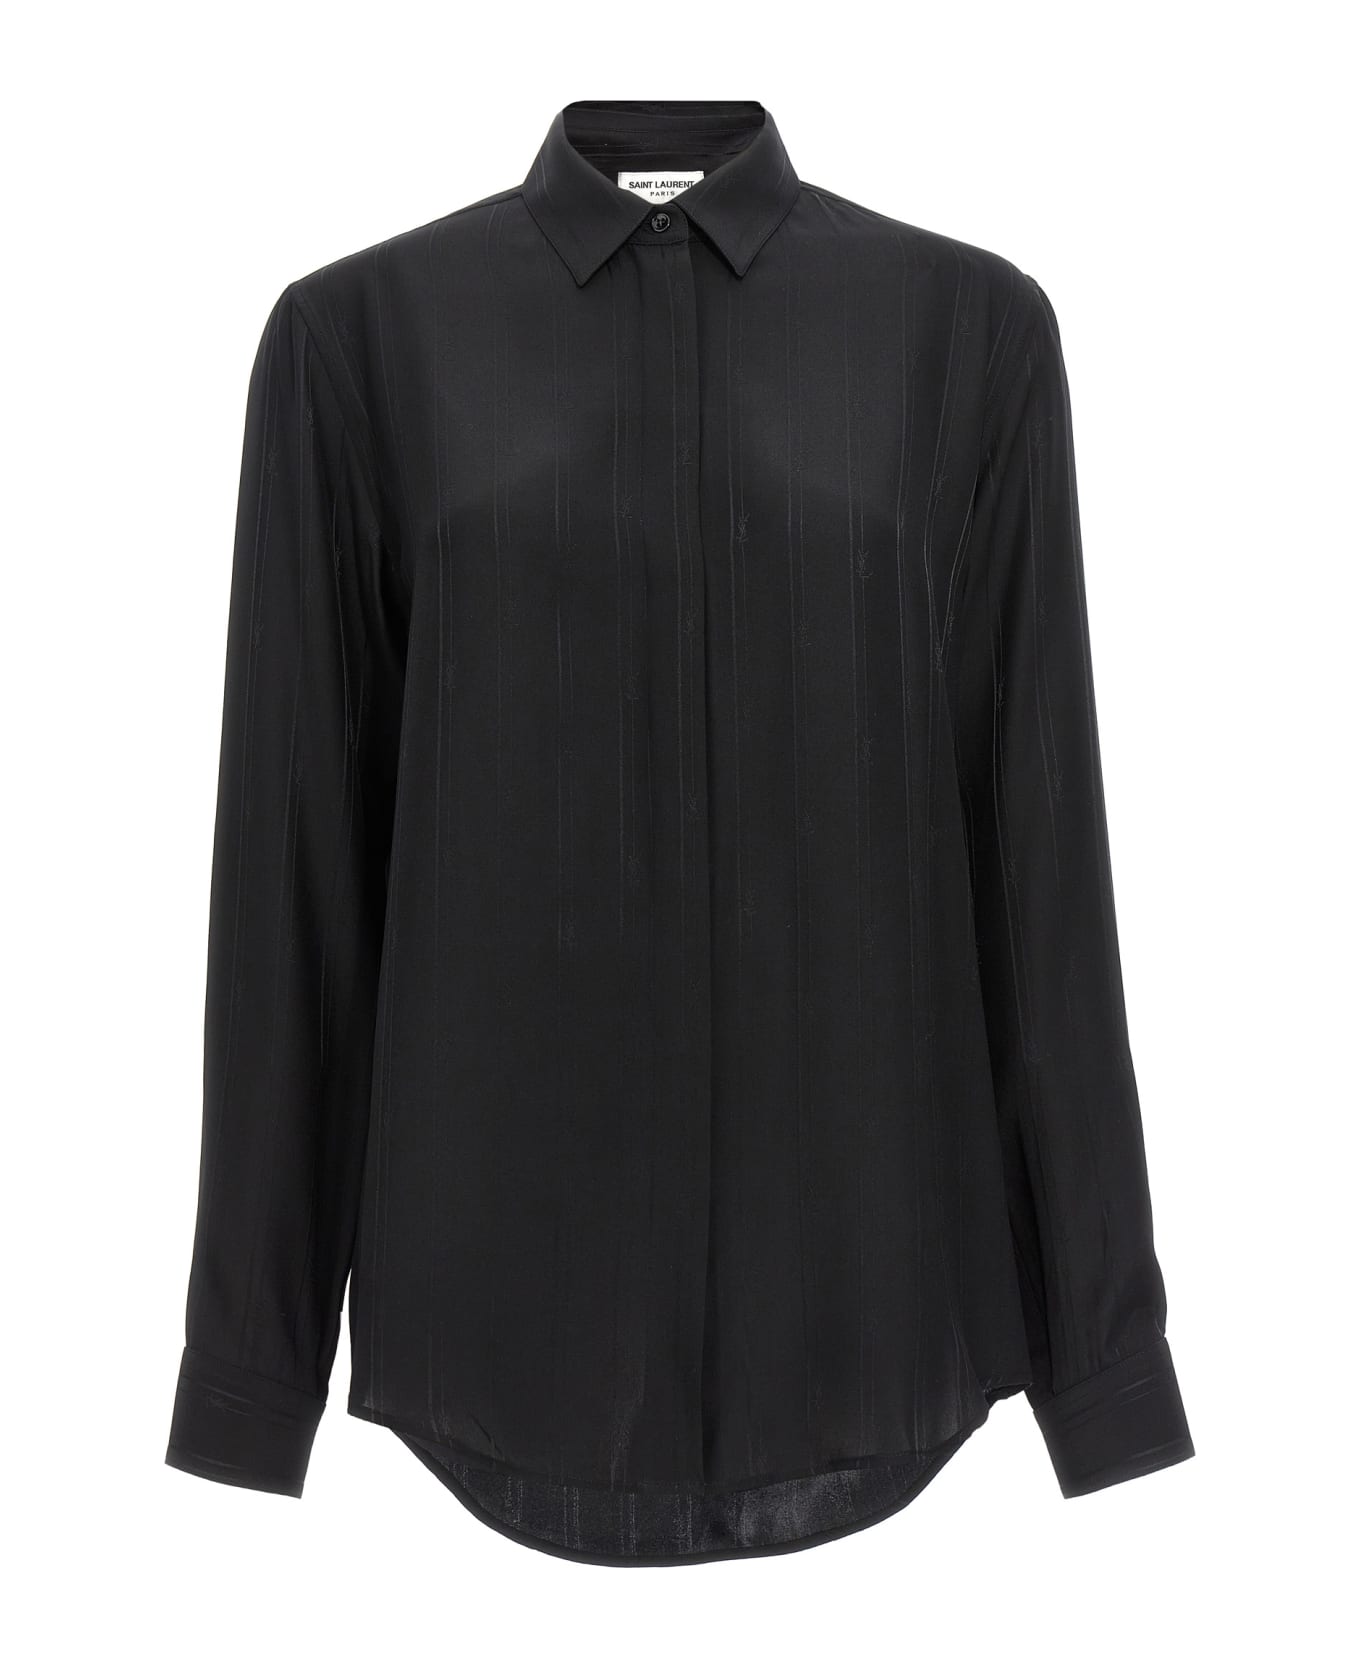 Saint Laurent Cassandre Silk Shirt - Black シャツ